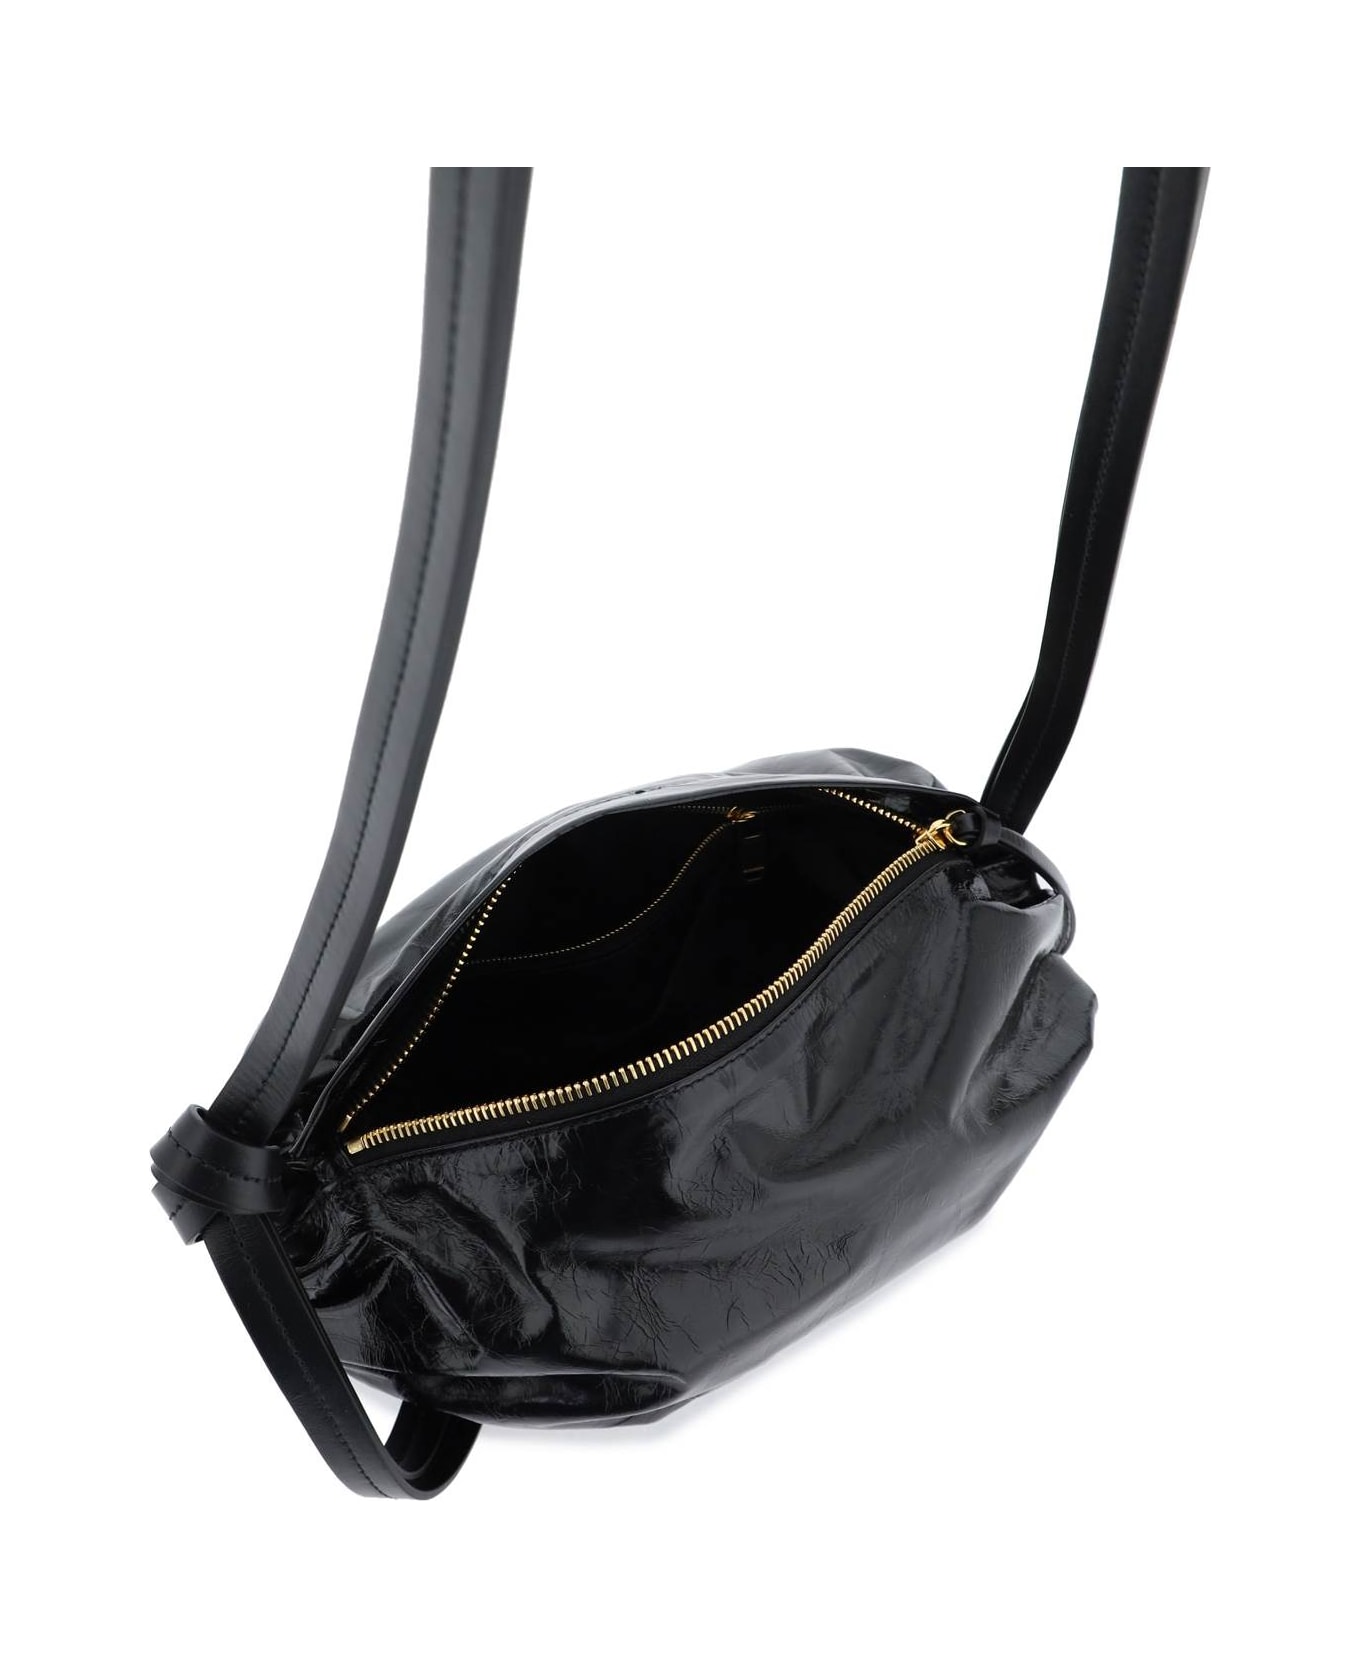 Jil Sander 'crossbody' Small Black Calf Leather Bag - Black ショルダーバッグ